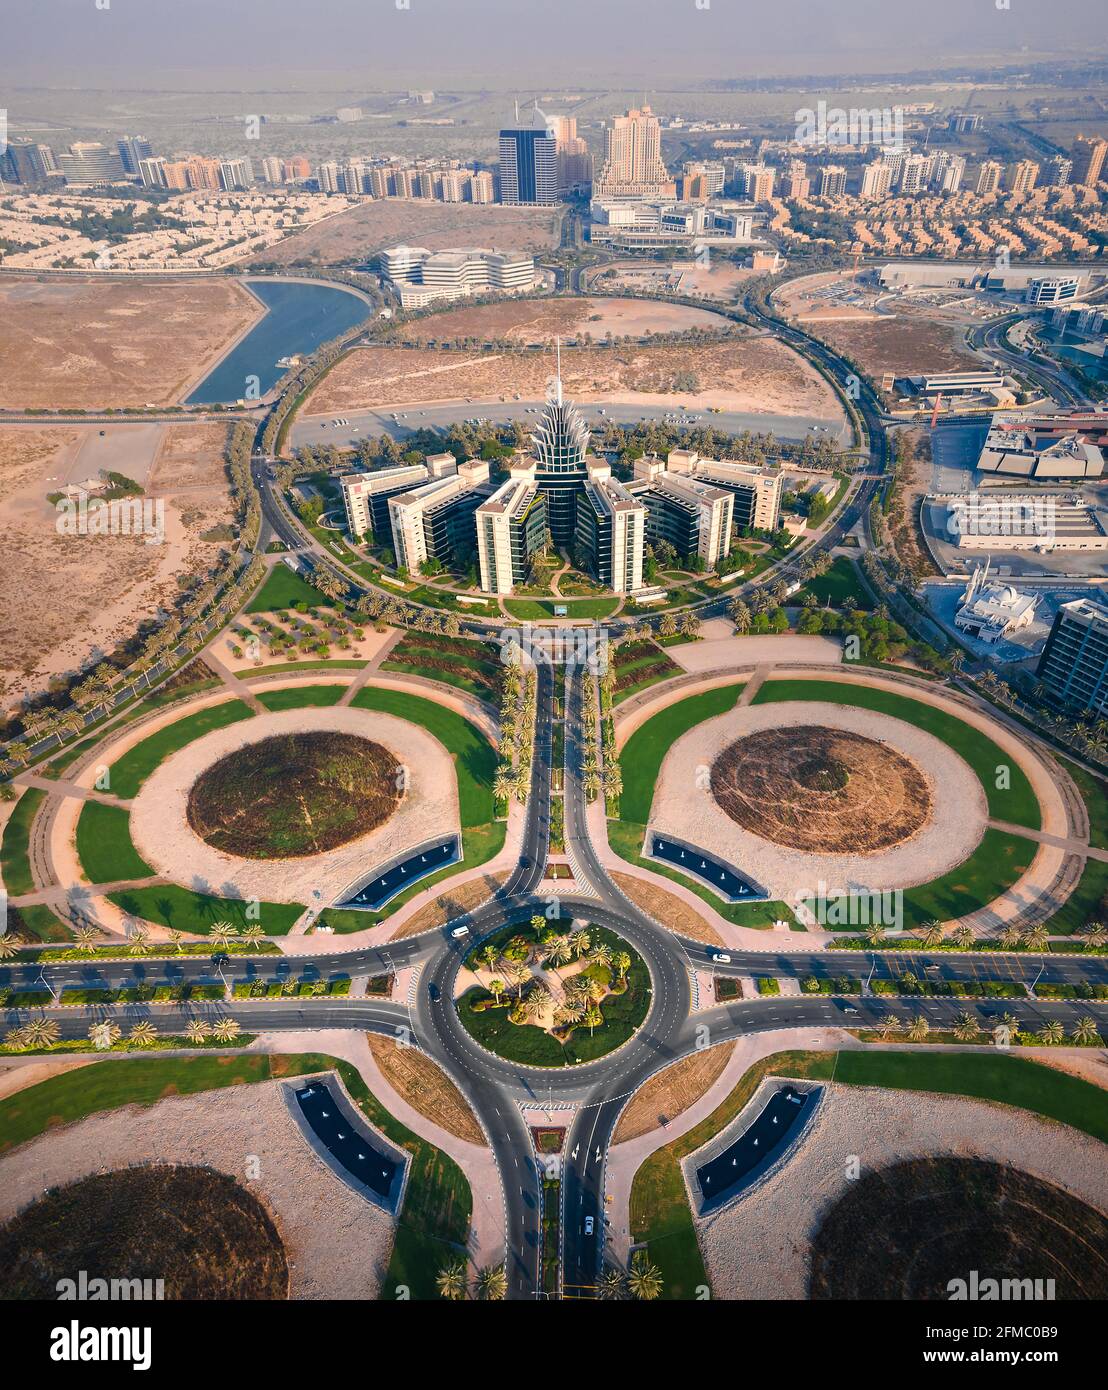 Dubai, United Arab Emirates - May 5, 2021: Dubai Silicon Oasis technology park, residential area and free zone in Dubai emirate suburbs at United Arab Stock Photo